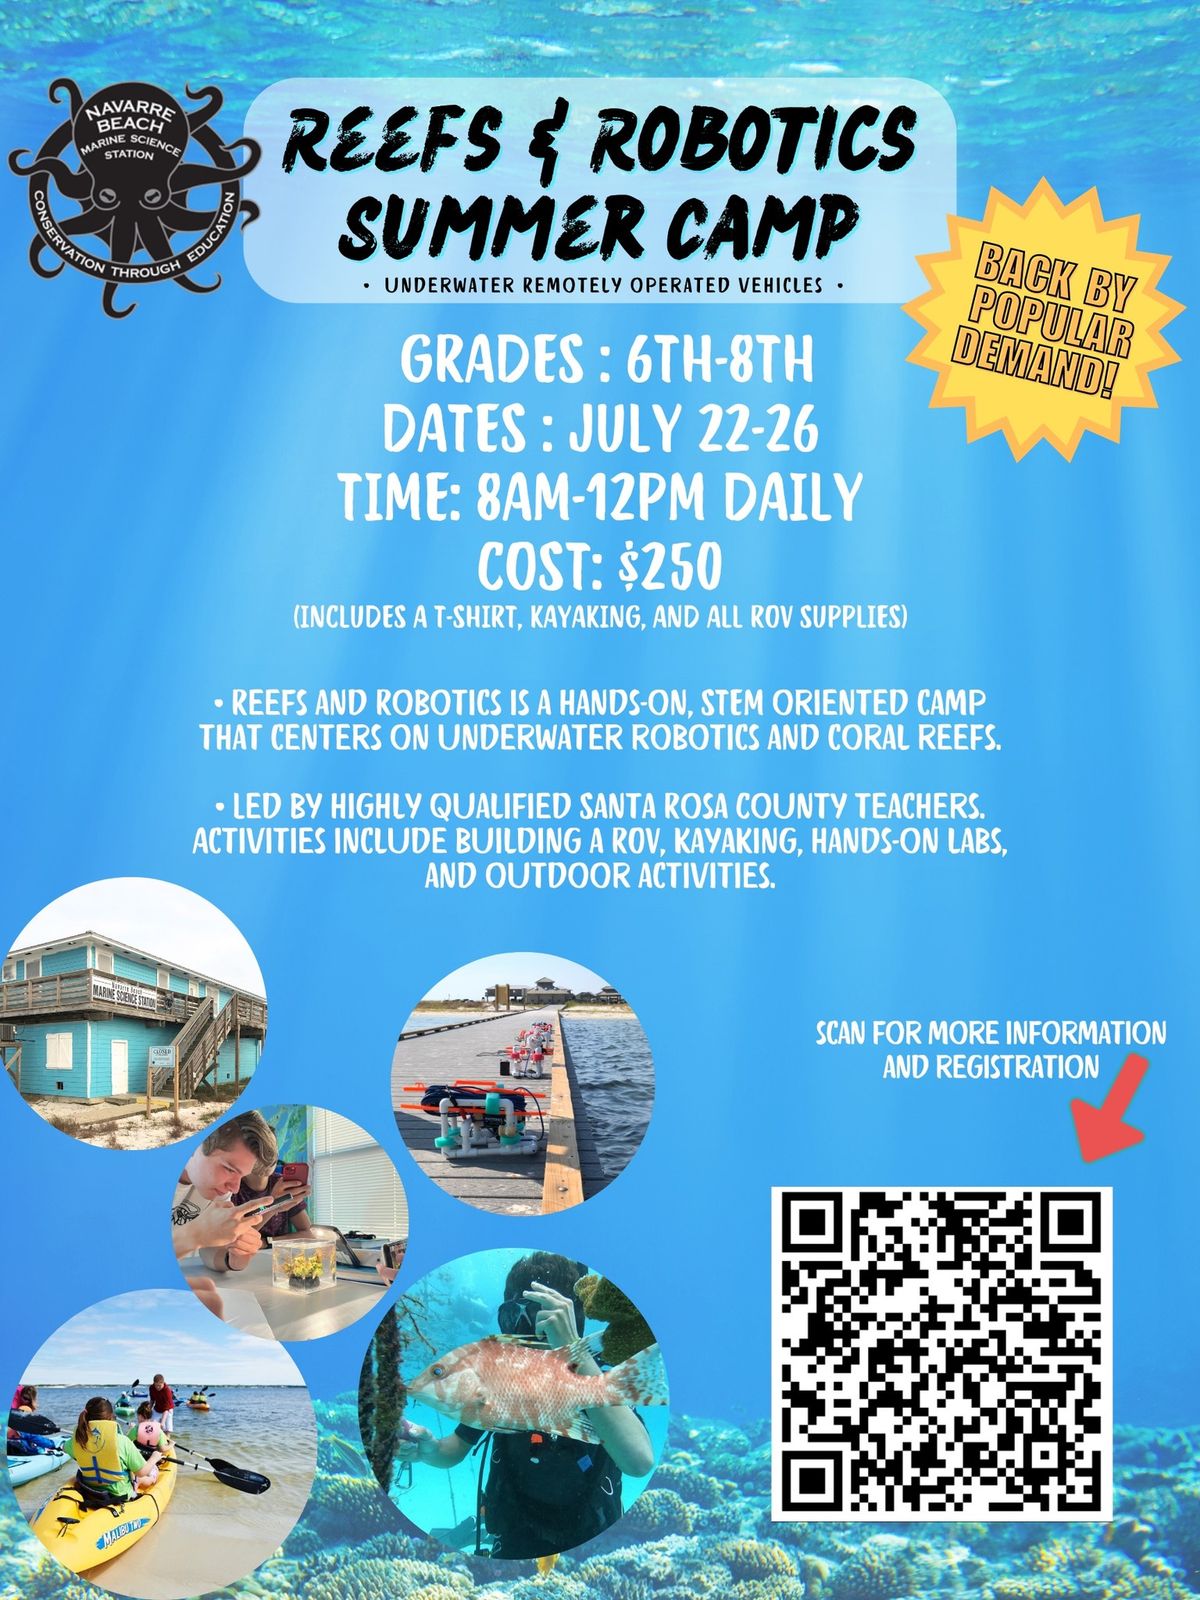 Reefs & Robotics summer camp registration is open! 